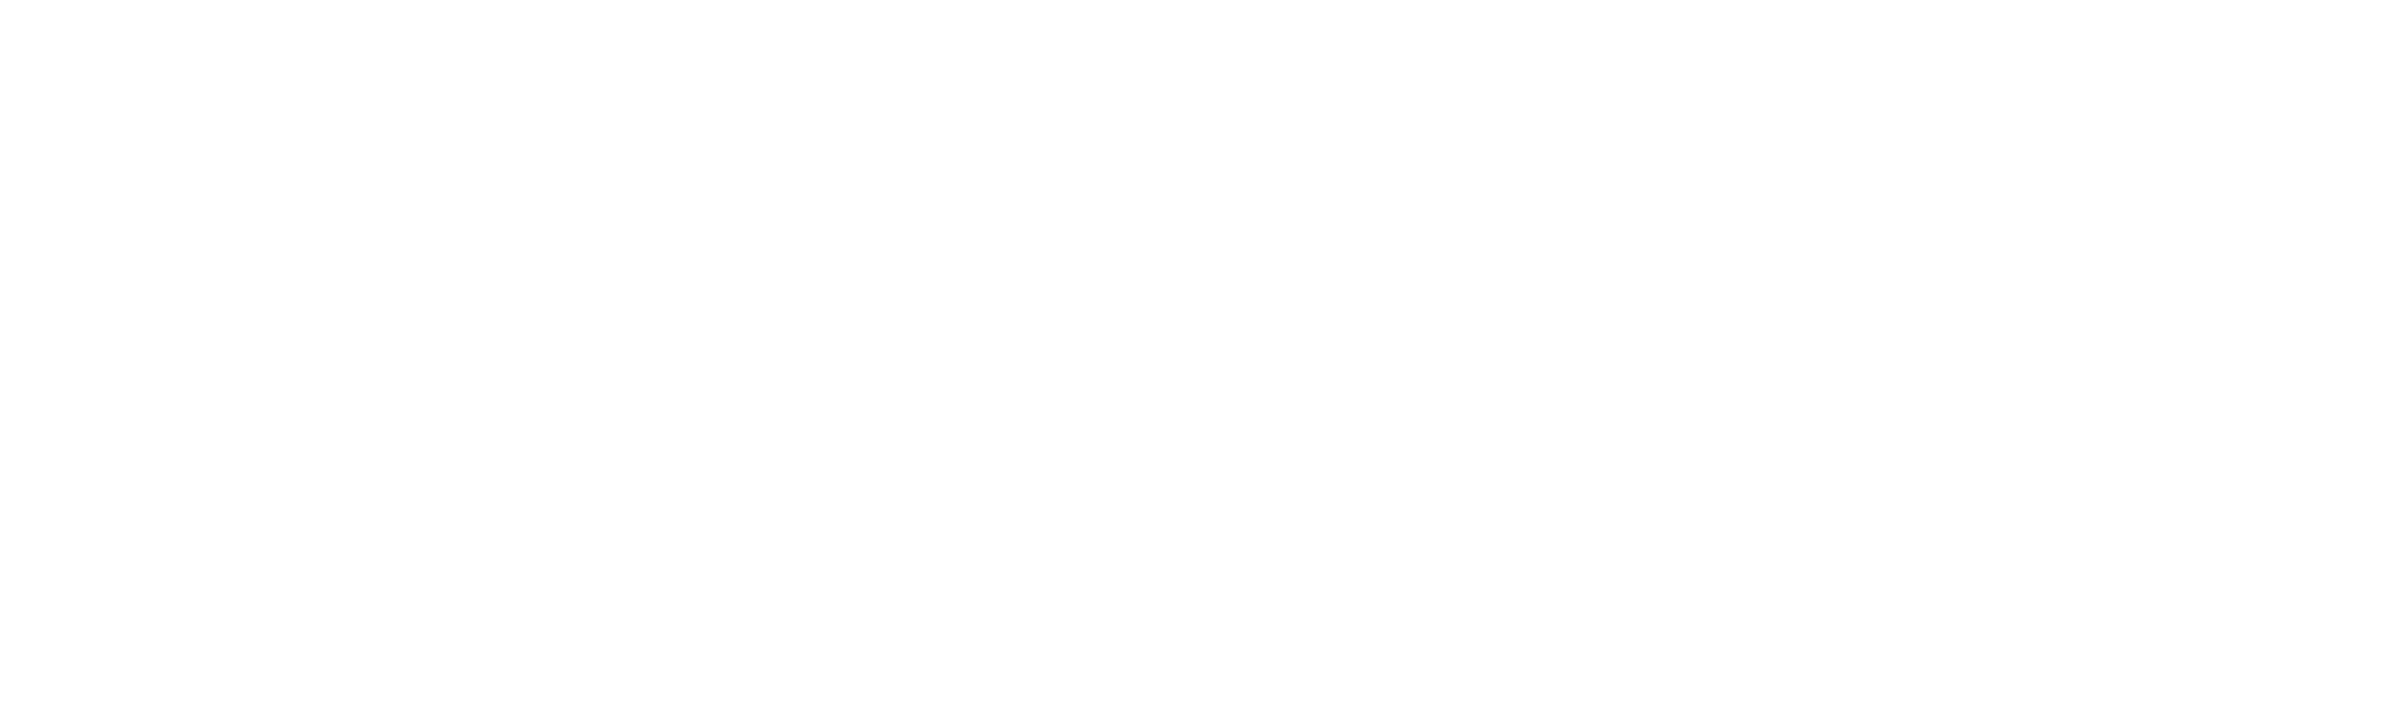 spotify-1-logo-black-and-white